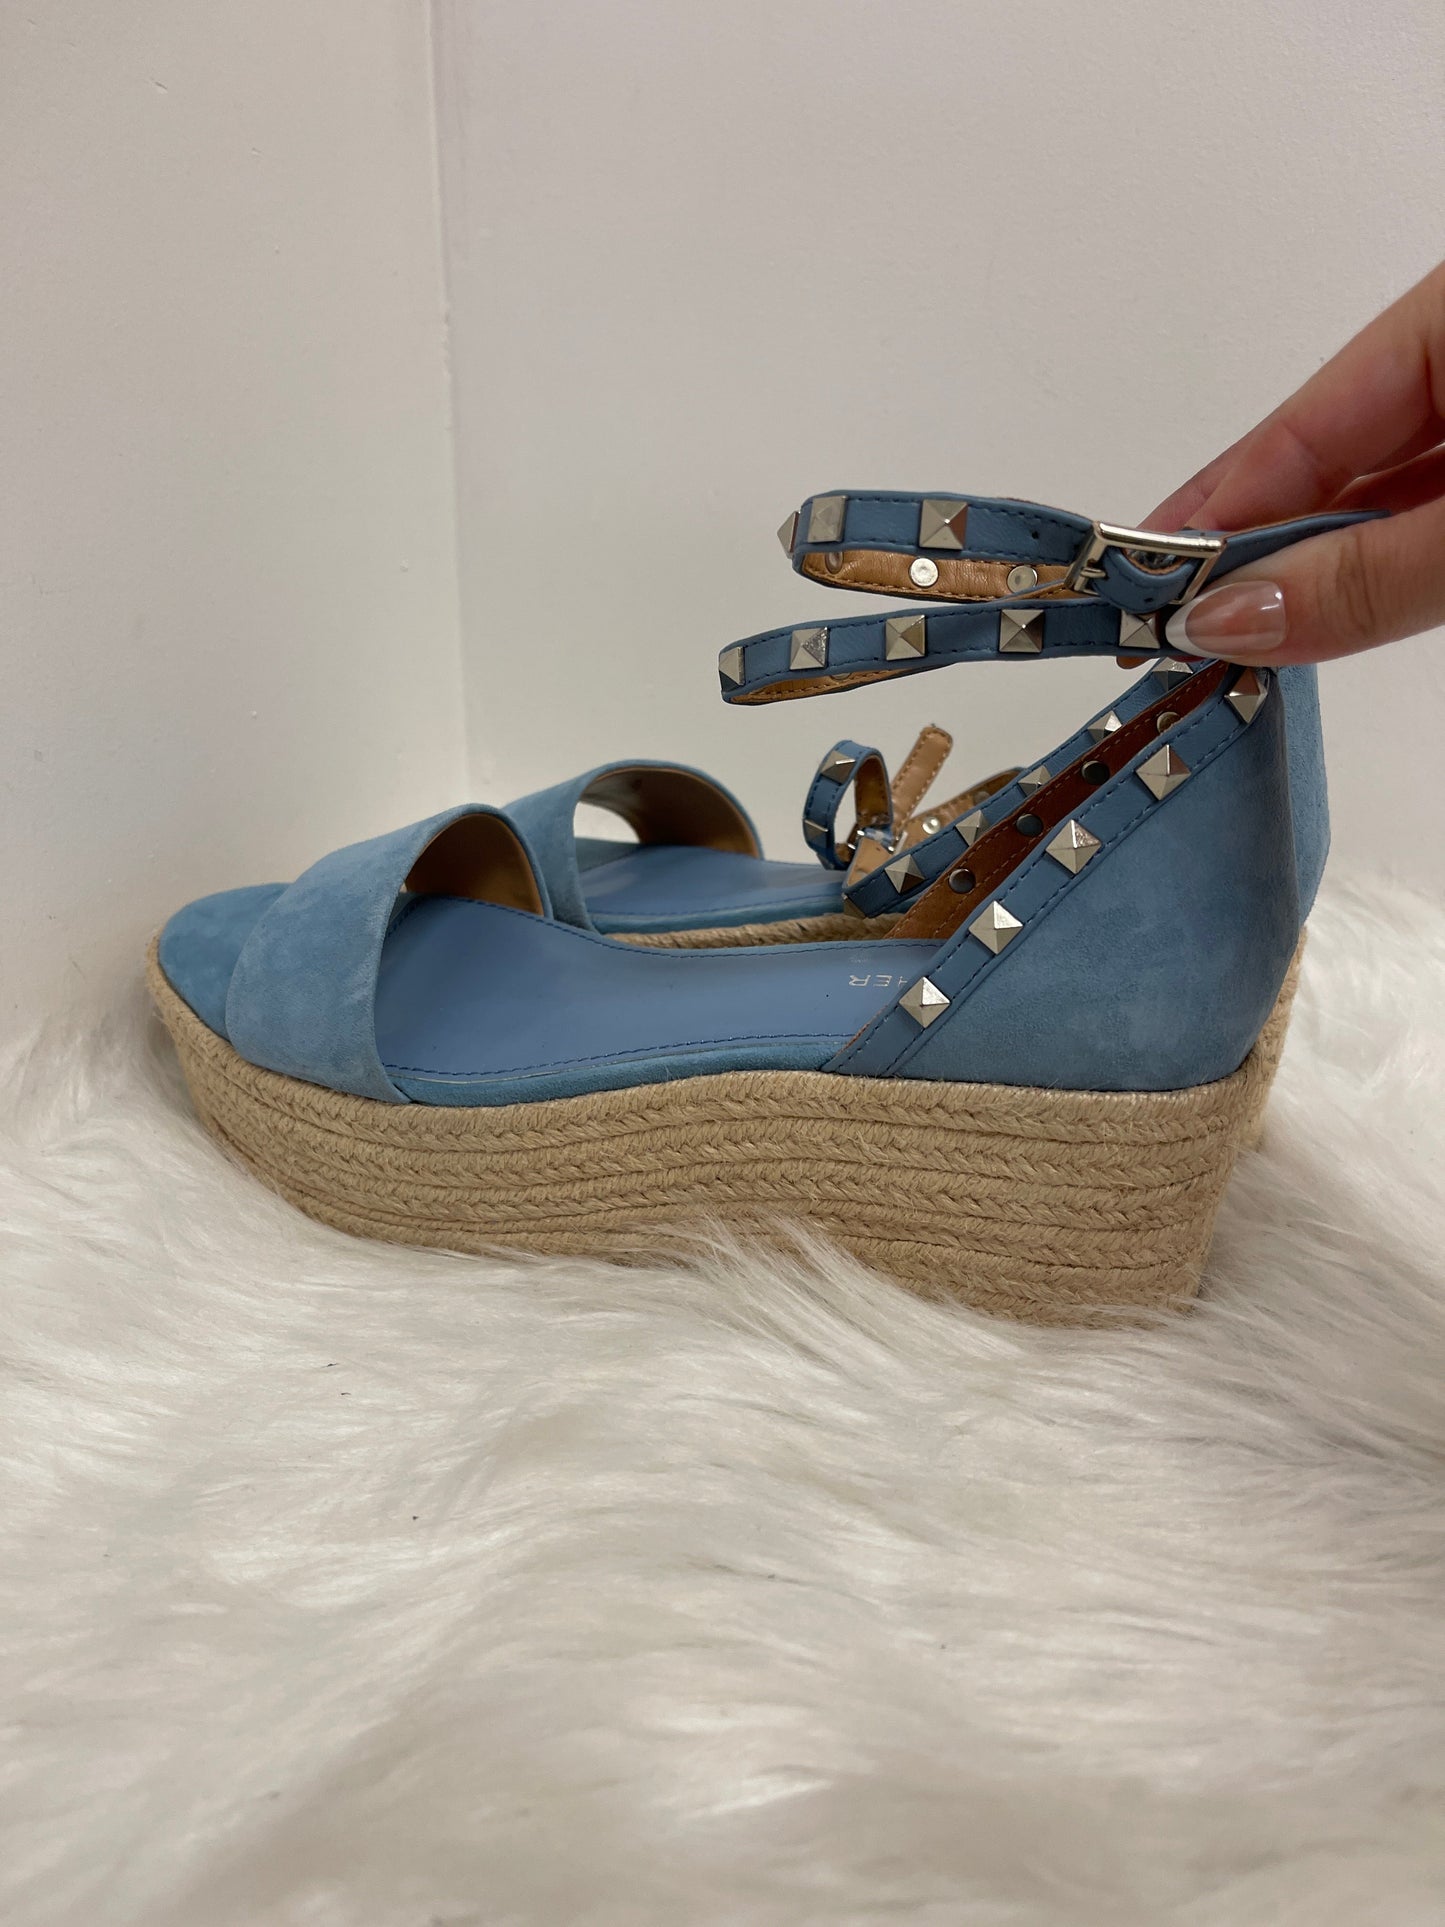 Blue Sandals Heels Wedge Marc Fisher, Size 9